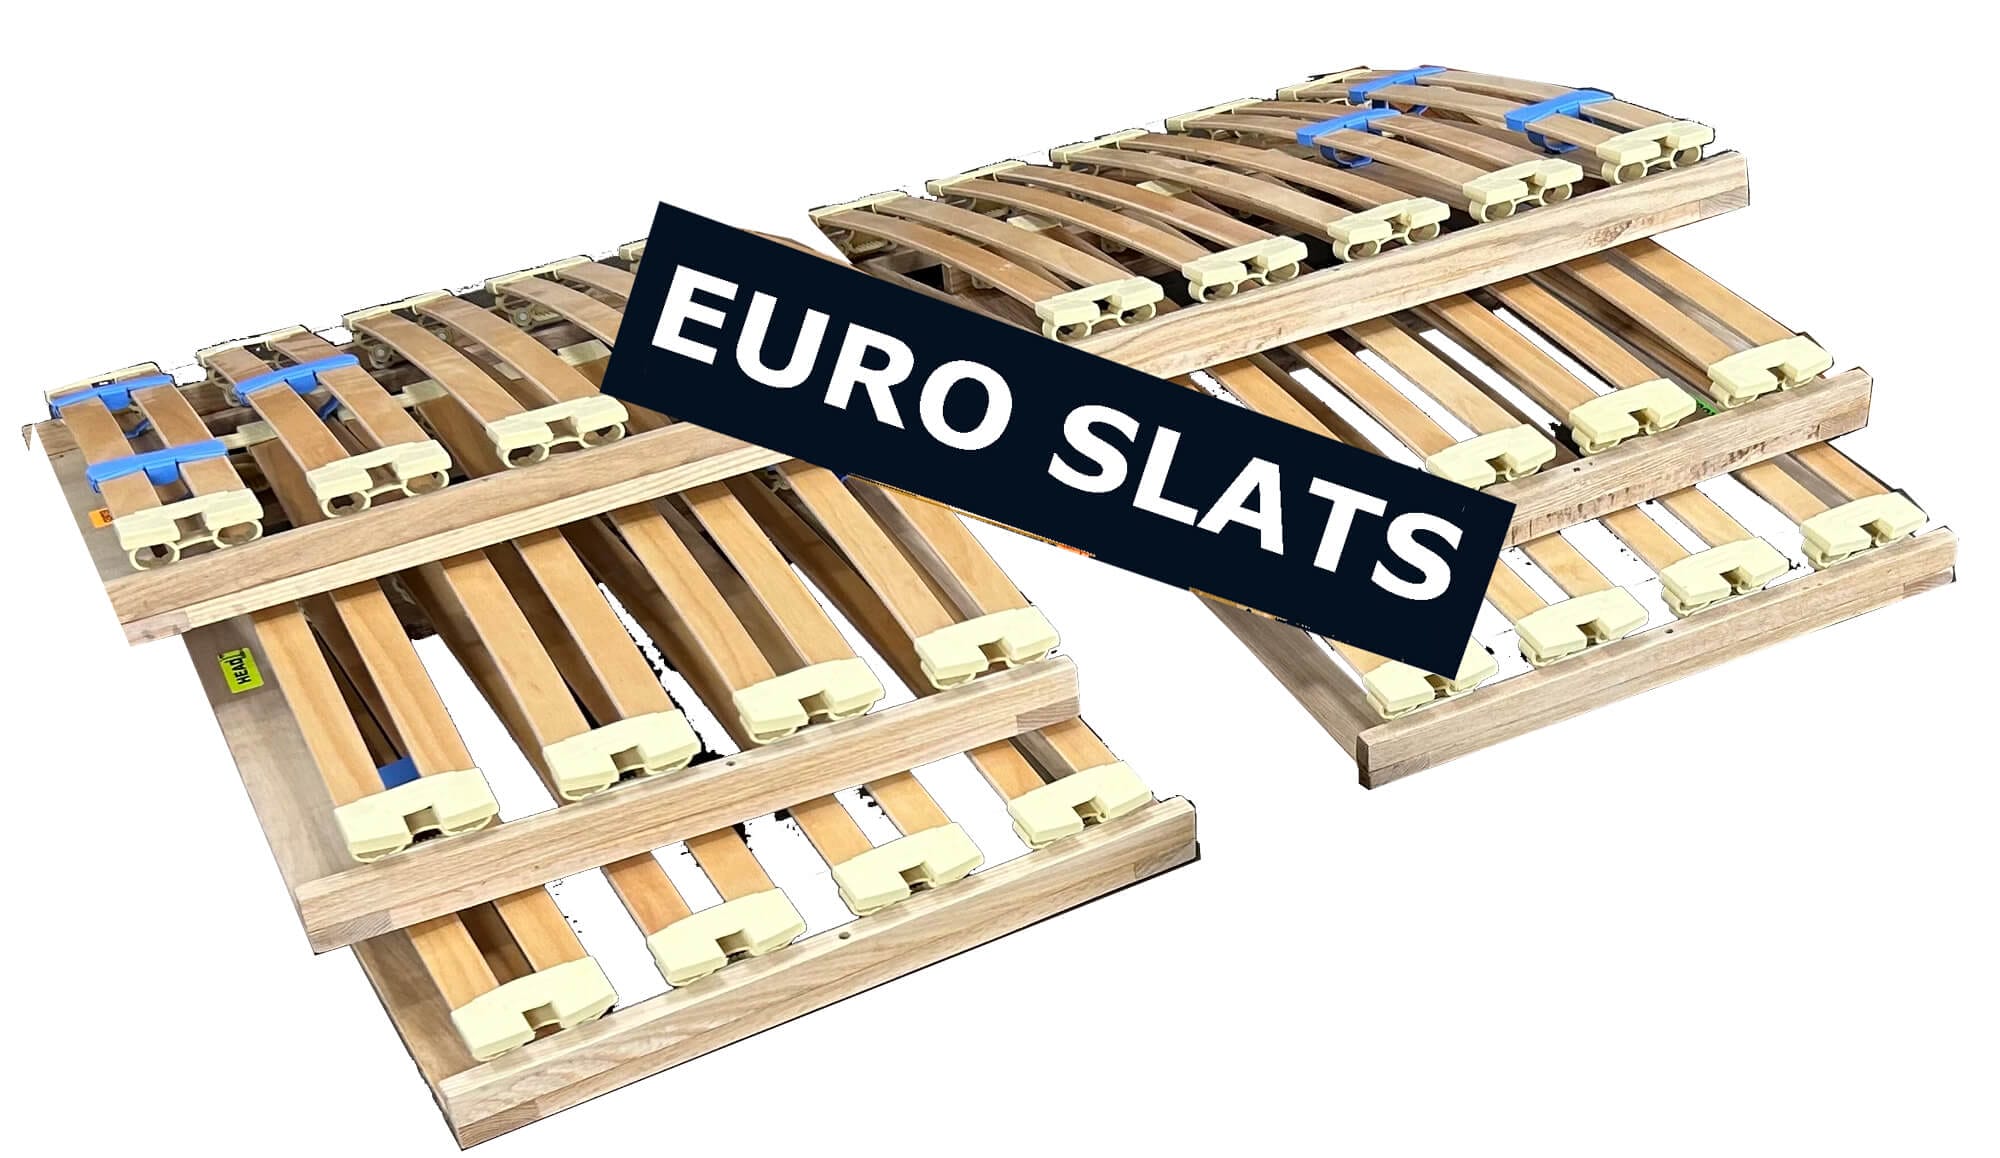 Euro Slats provide adjustable contouring support